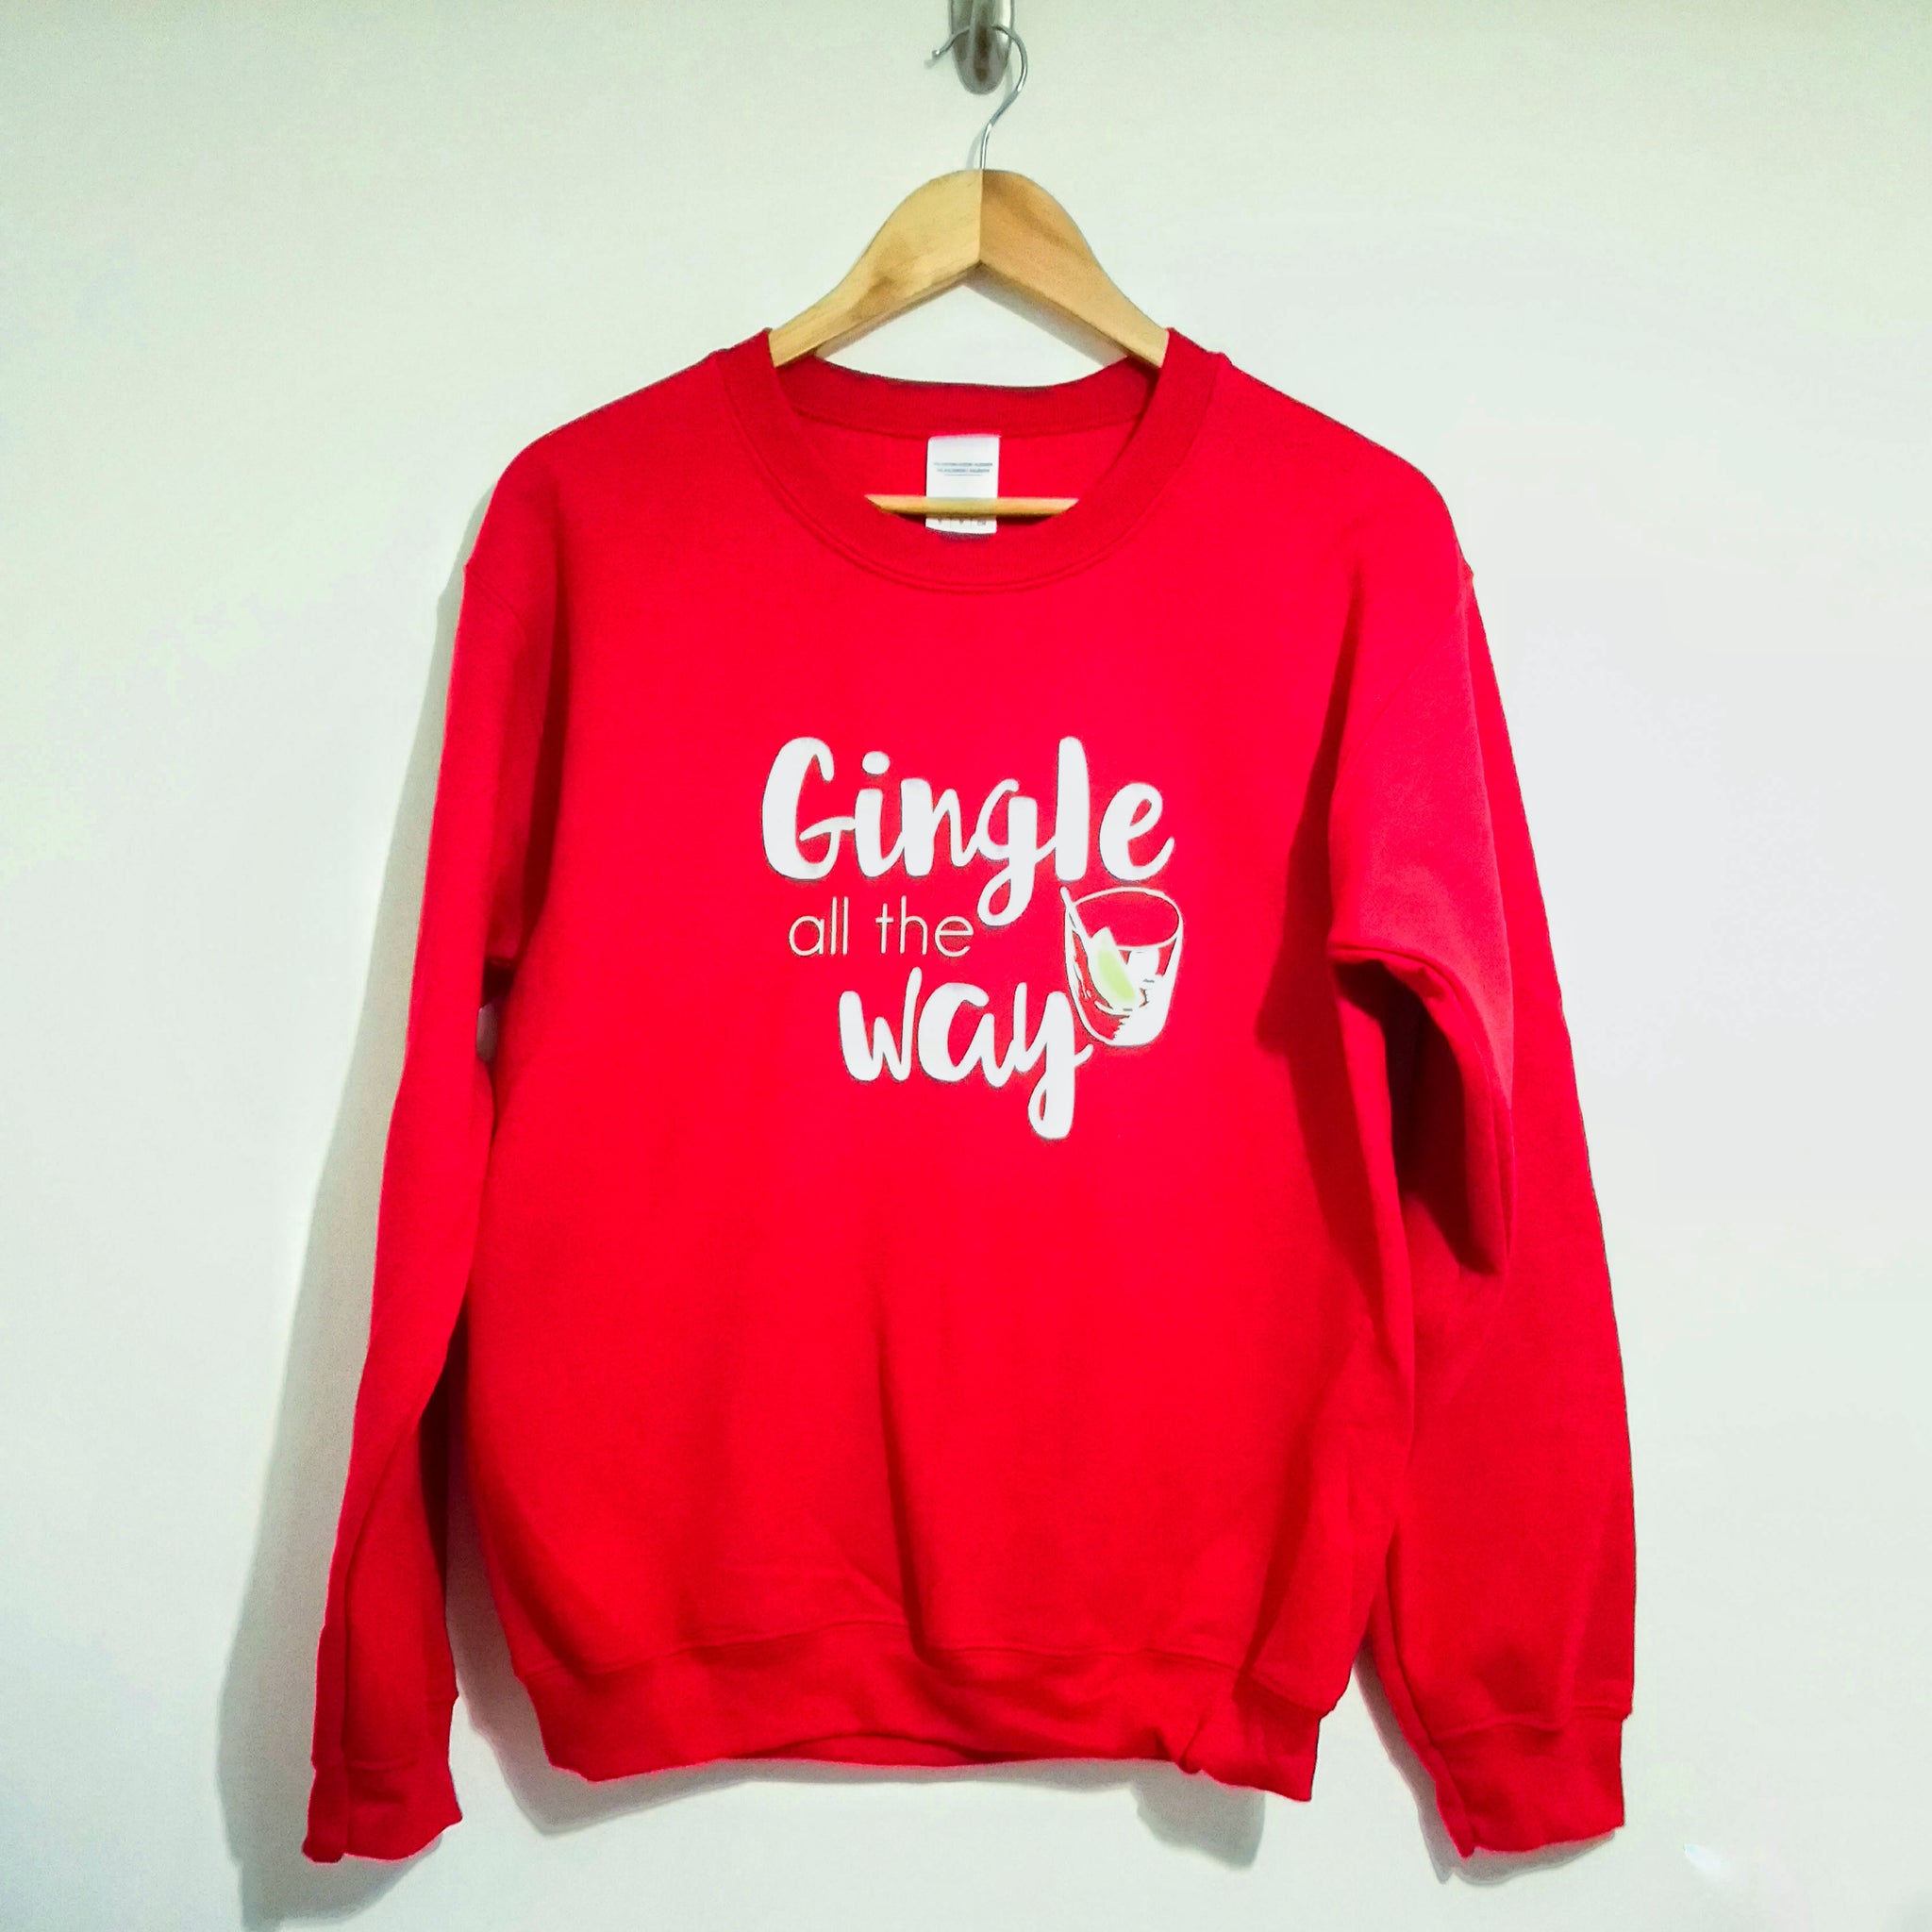 "Gingle all the way" festive Christmas sweatshirt